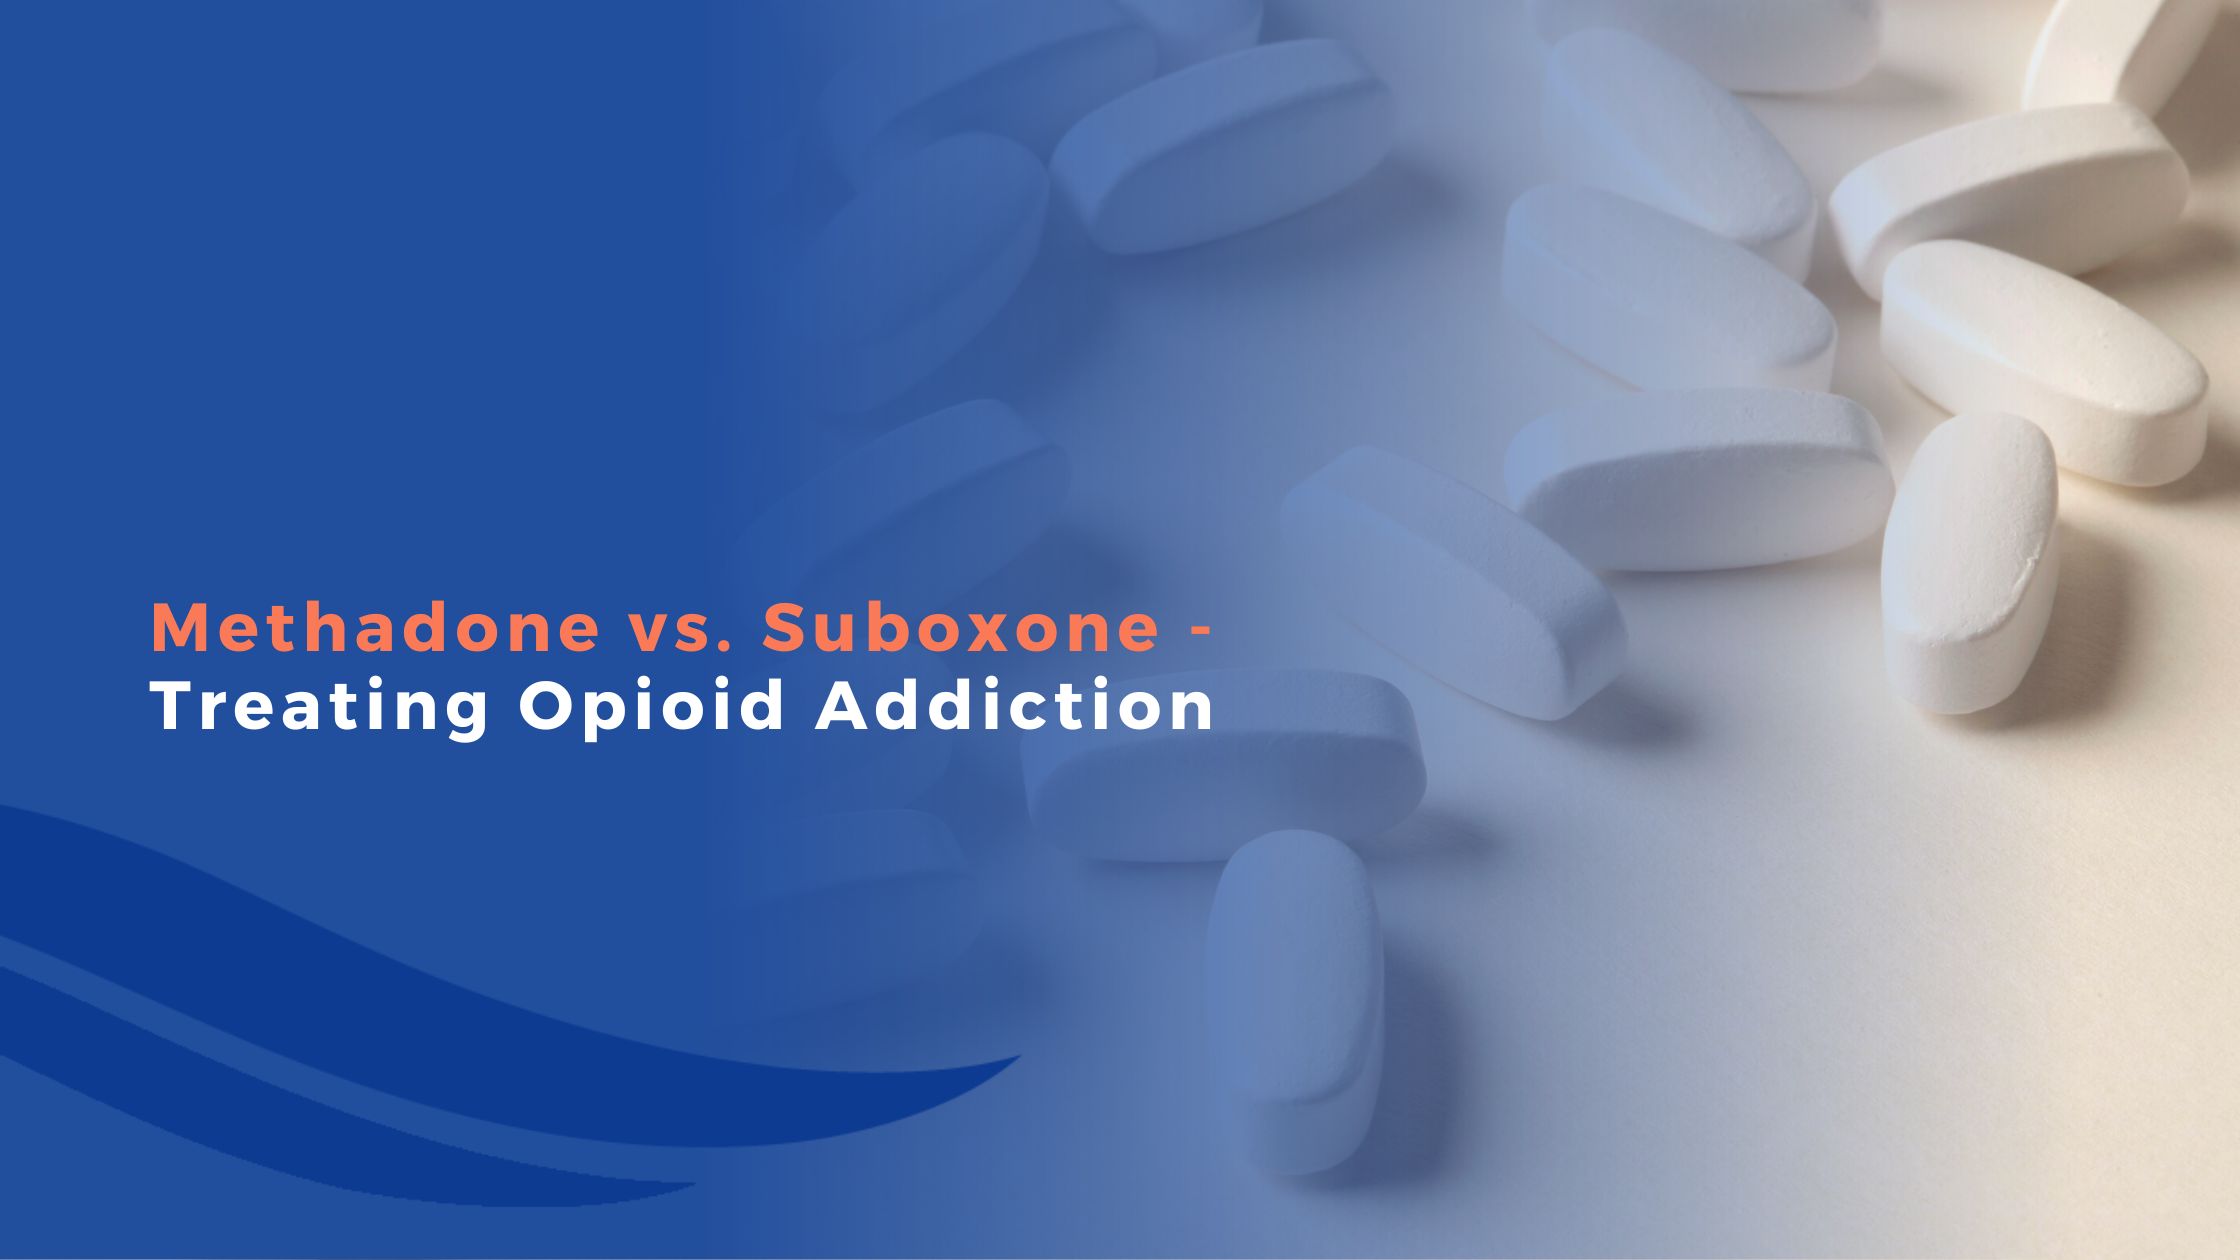 Methadone vs. Suboxone